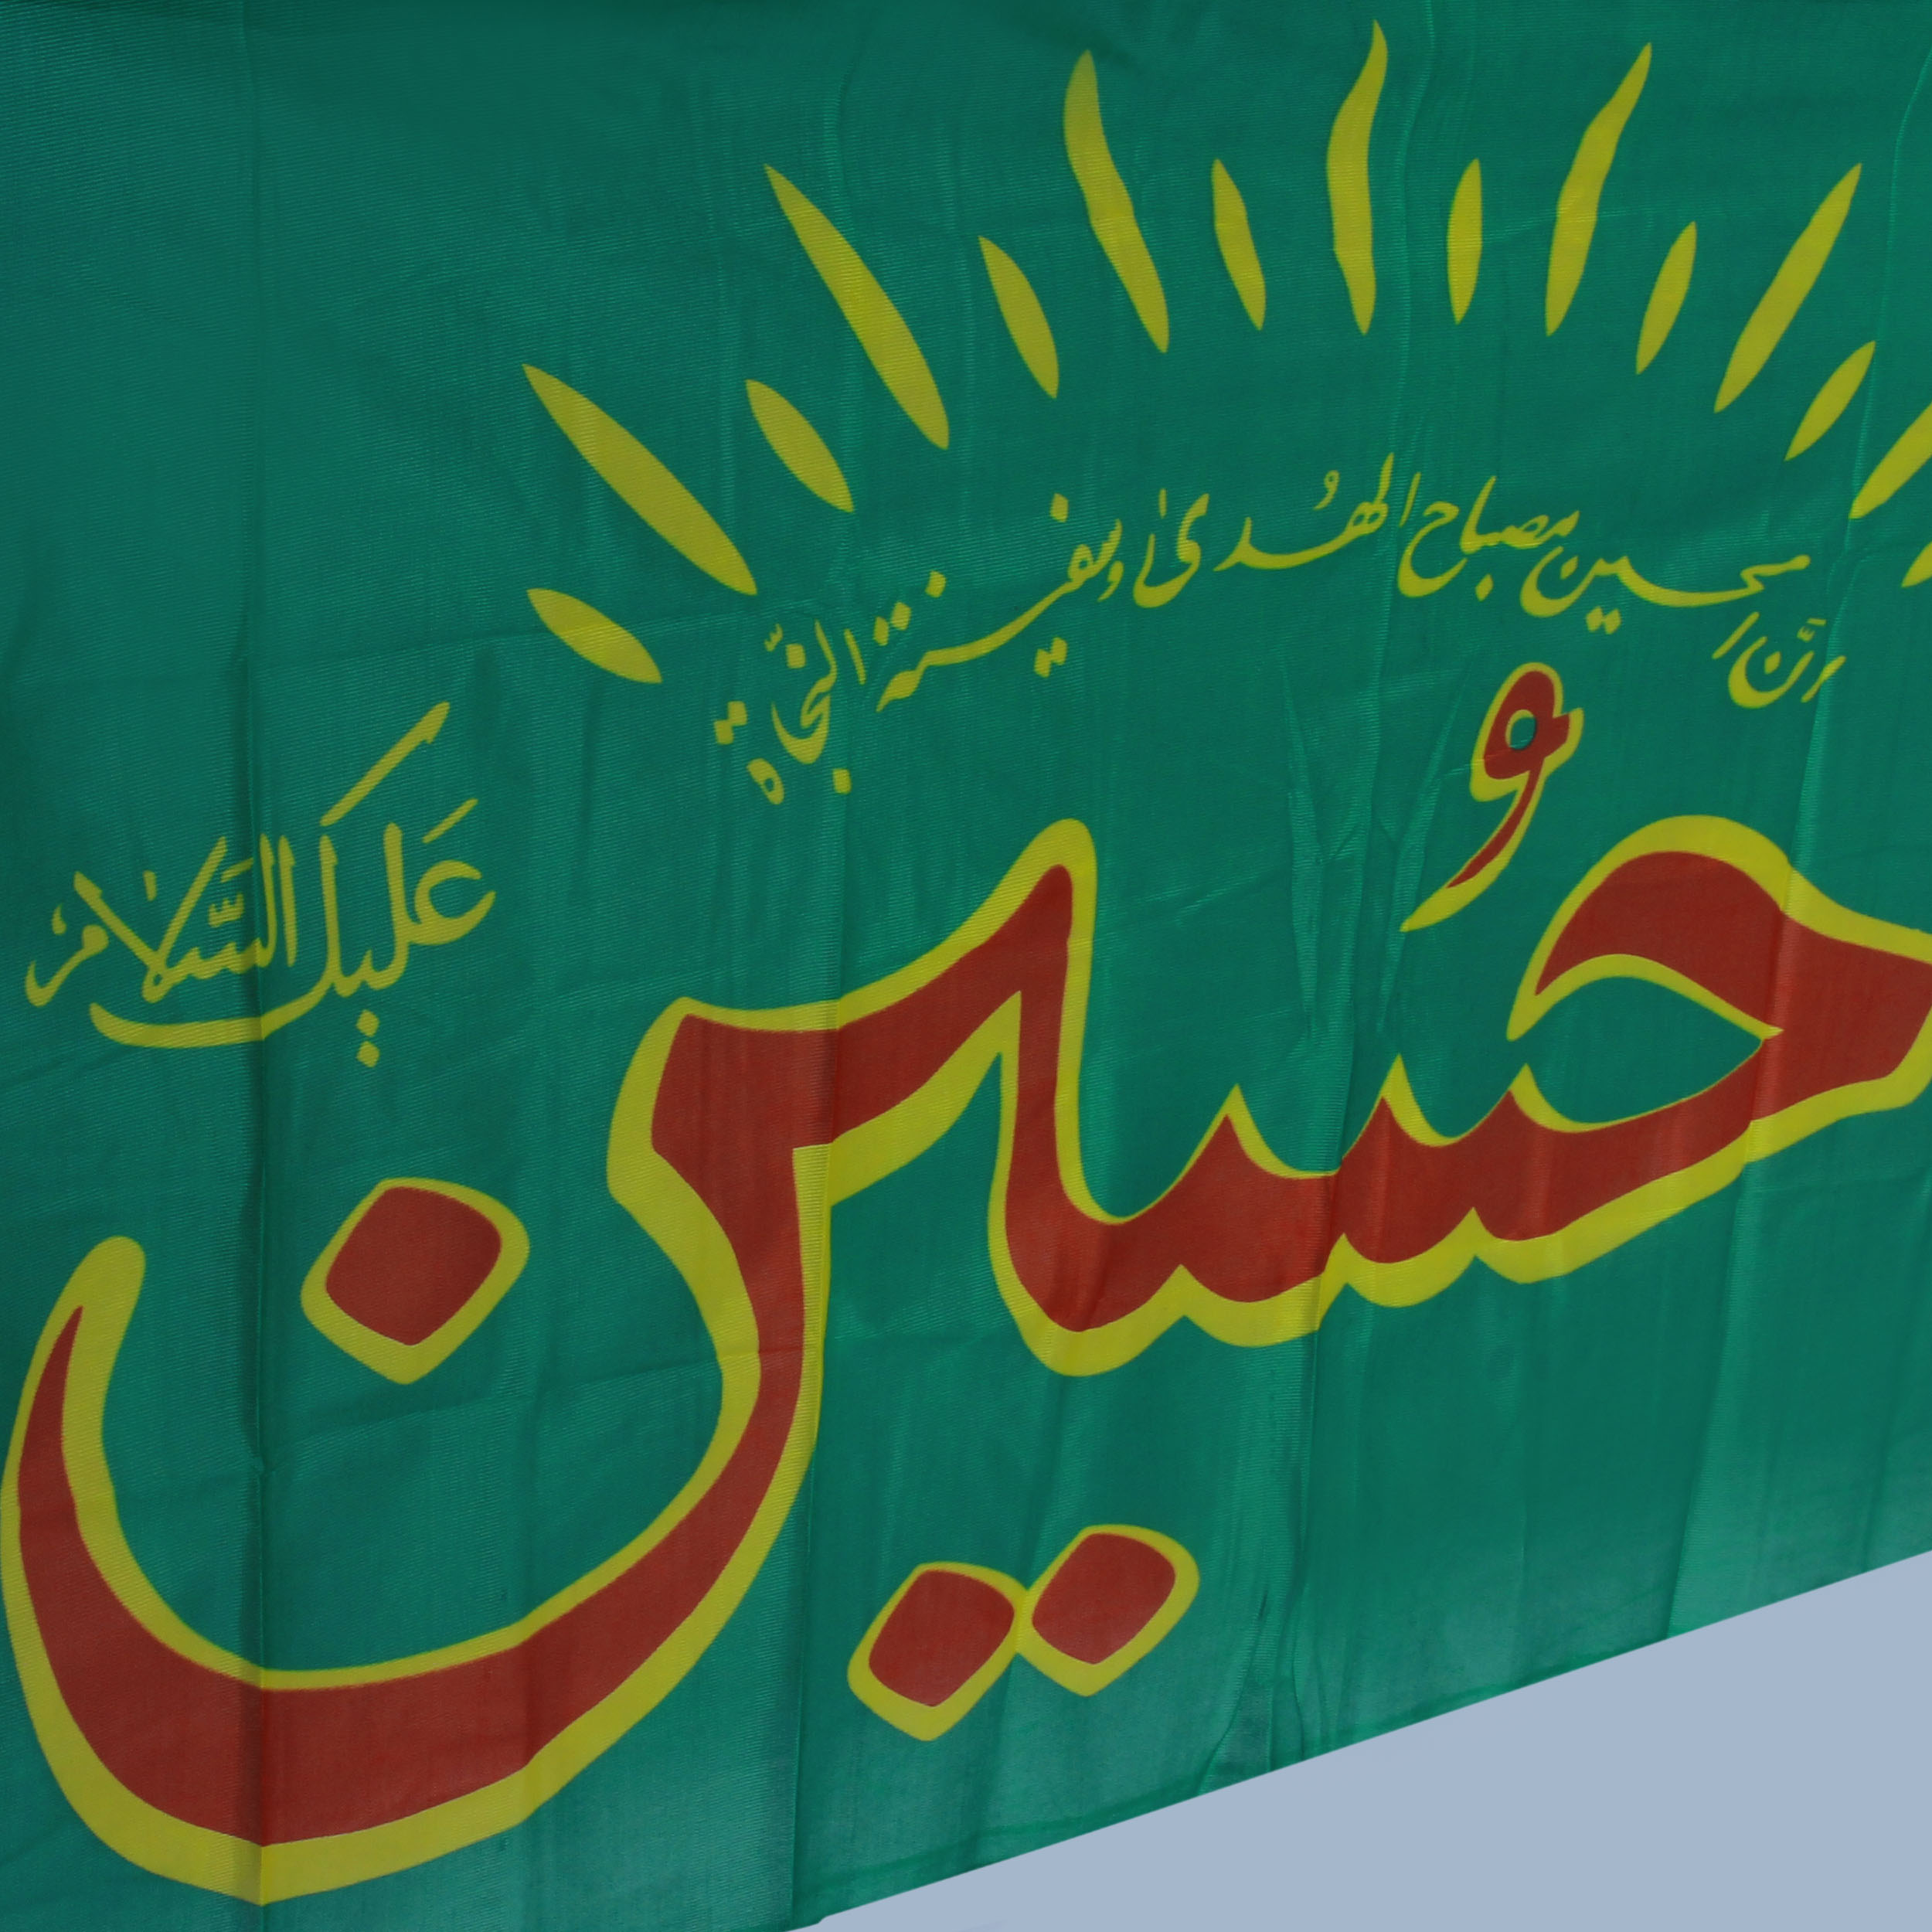  پرچم طرح یاحسین کد PAR-090